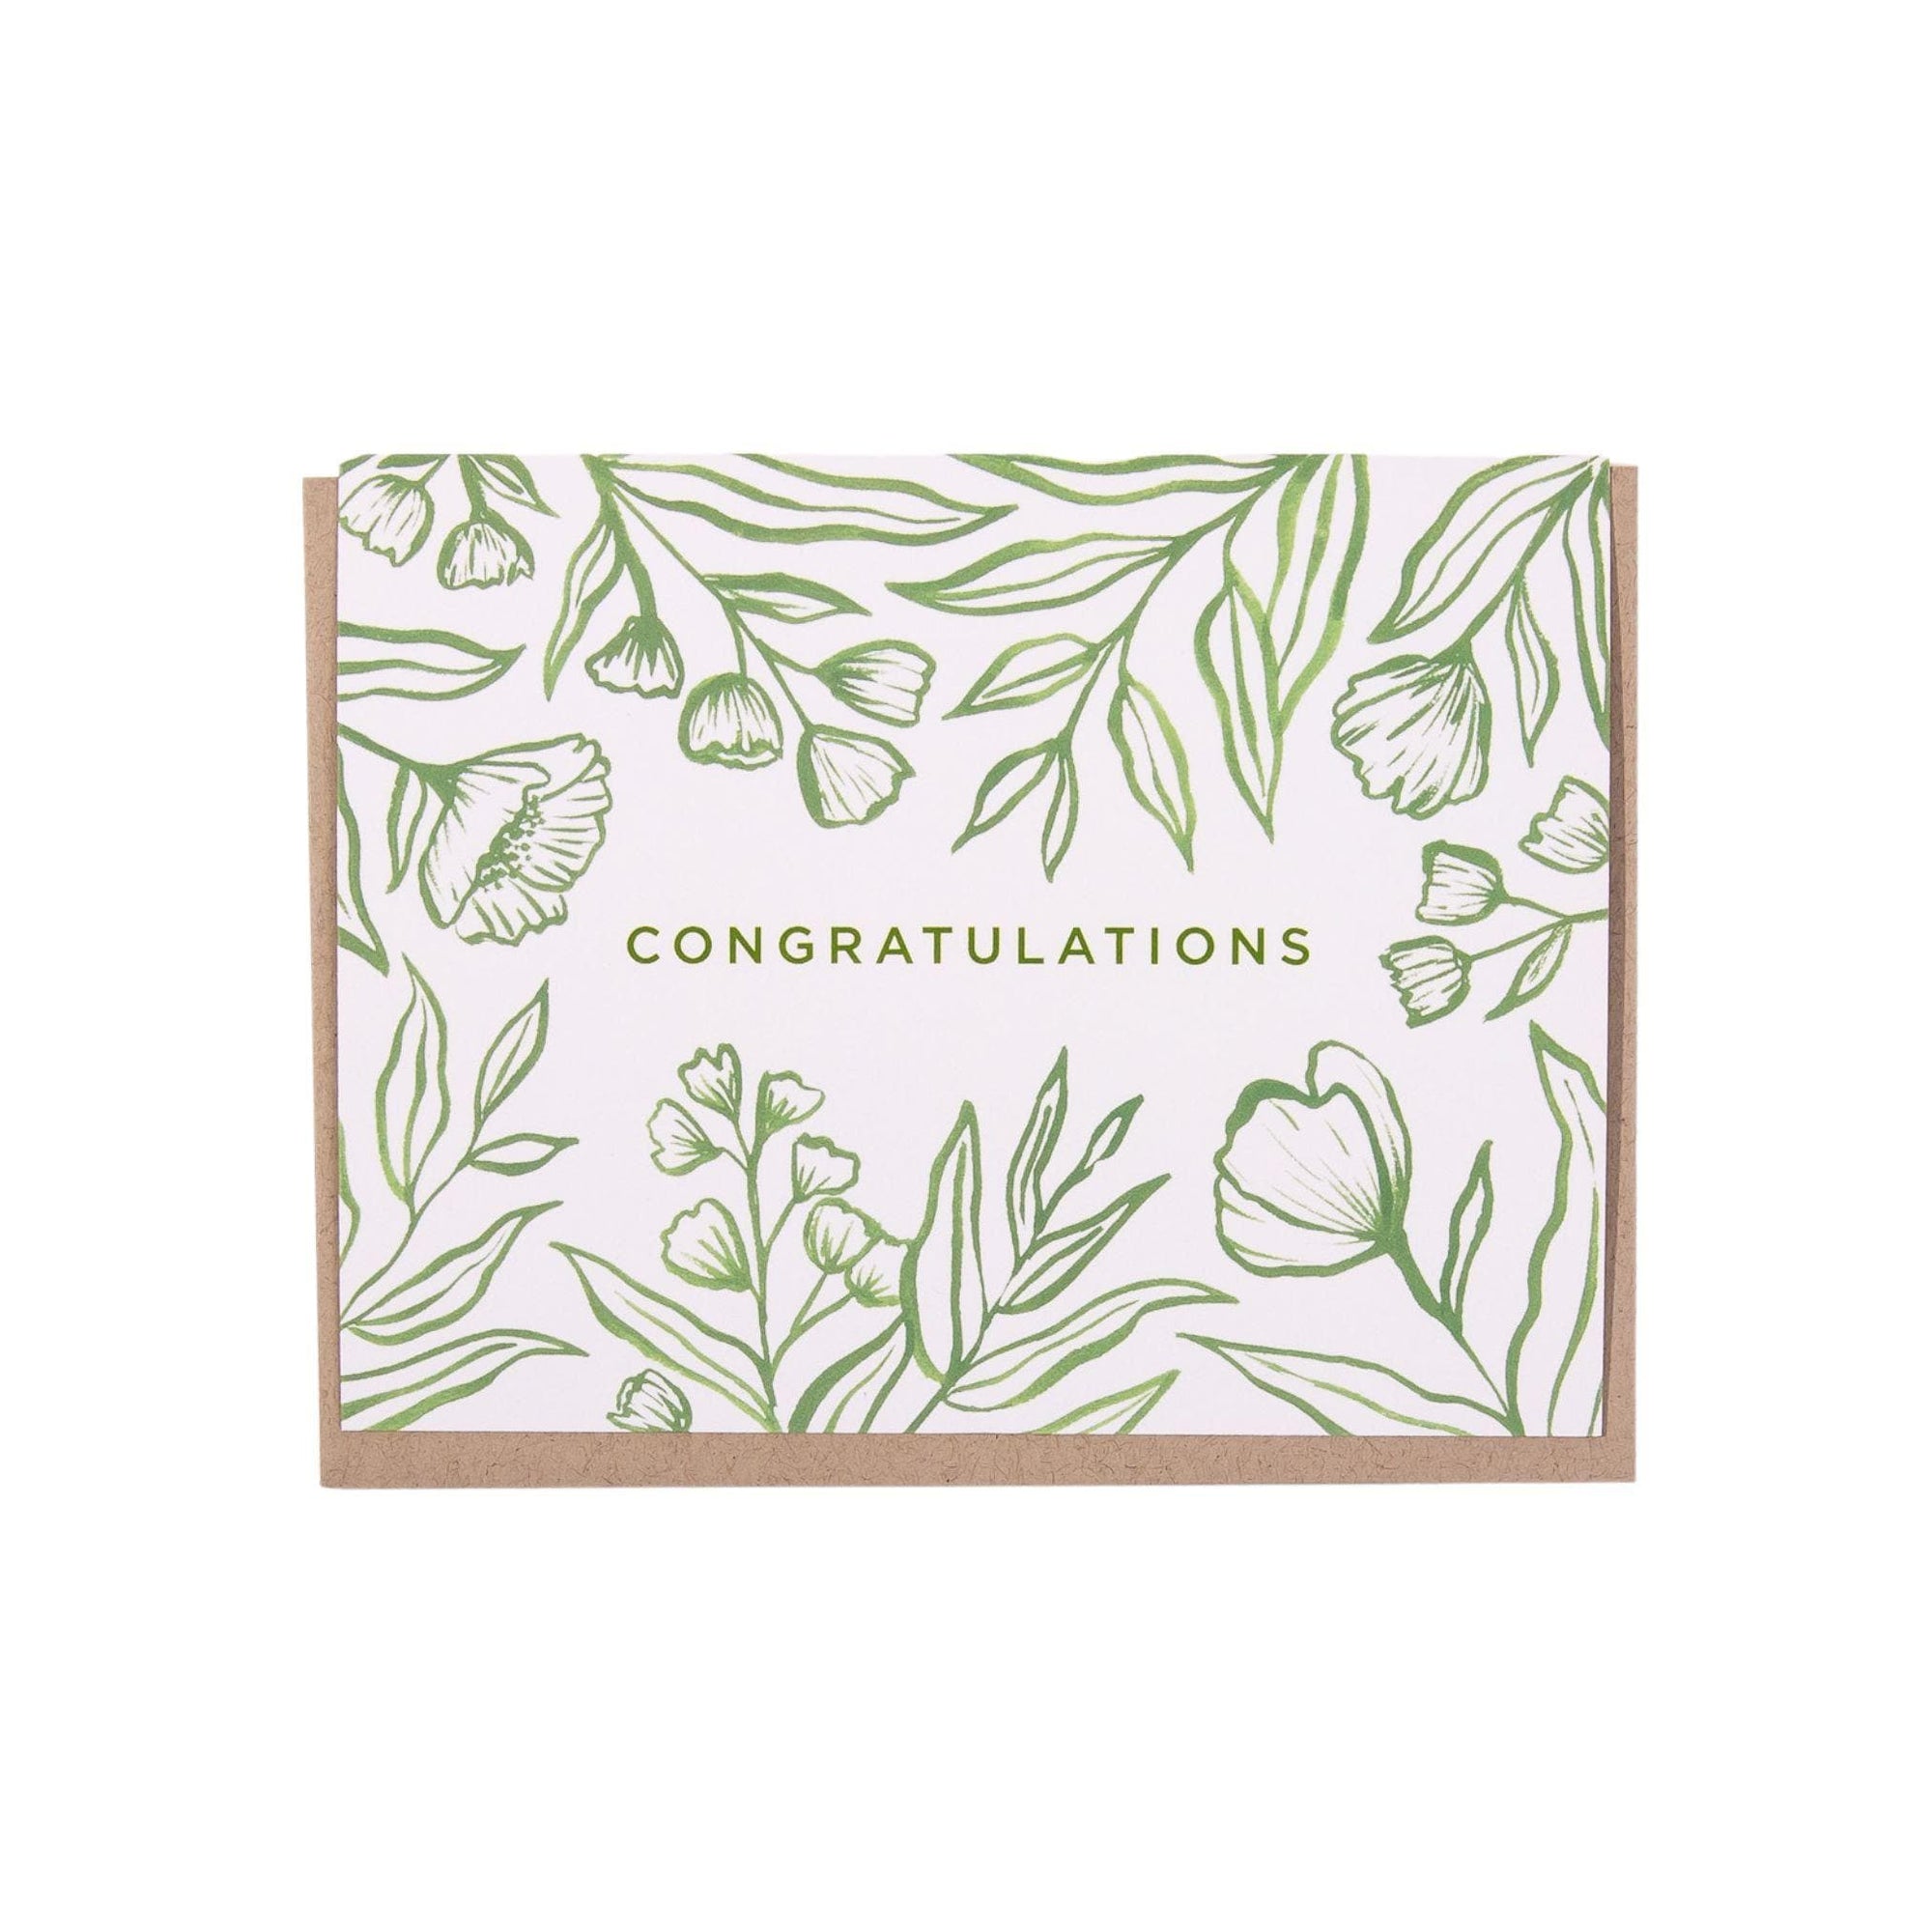 Congratulations Botanical Greeting Card - Green Fresh Florals + Plants